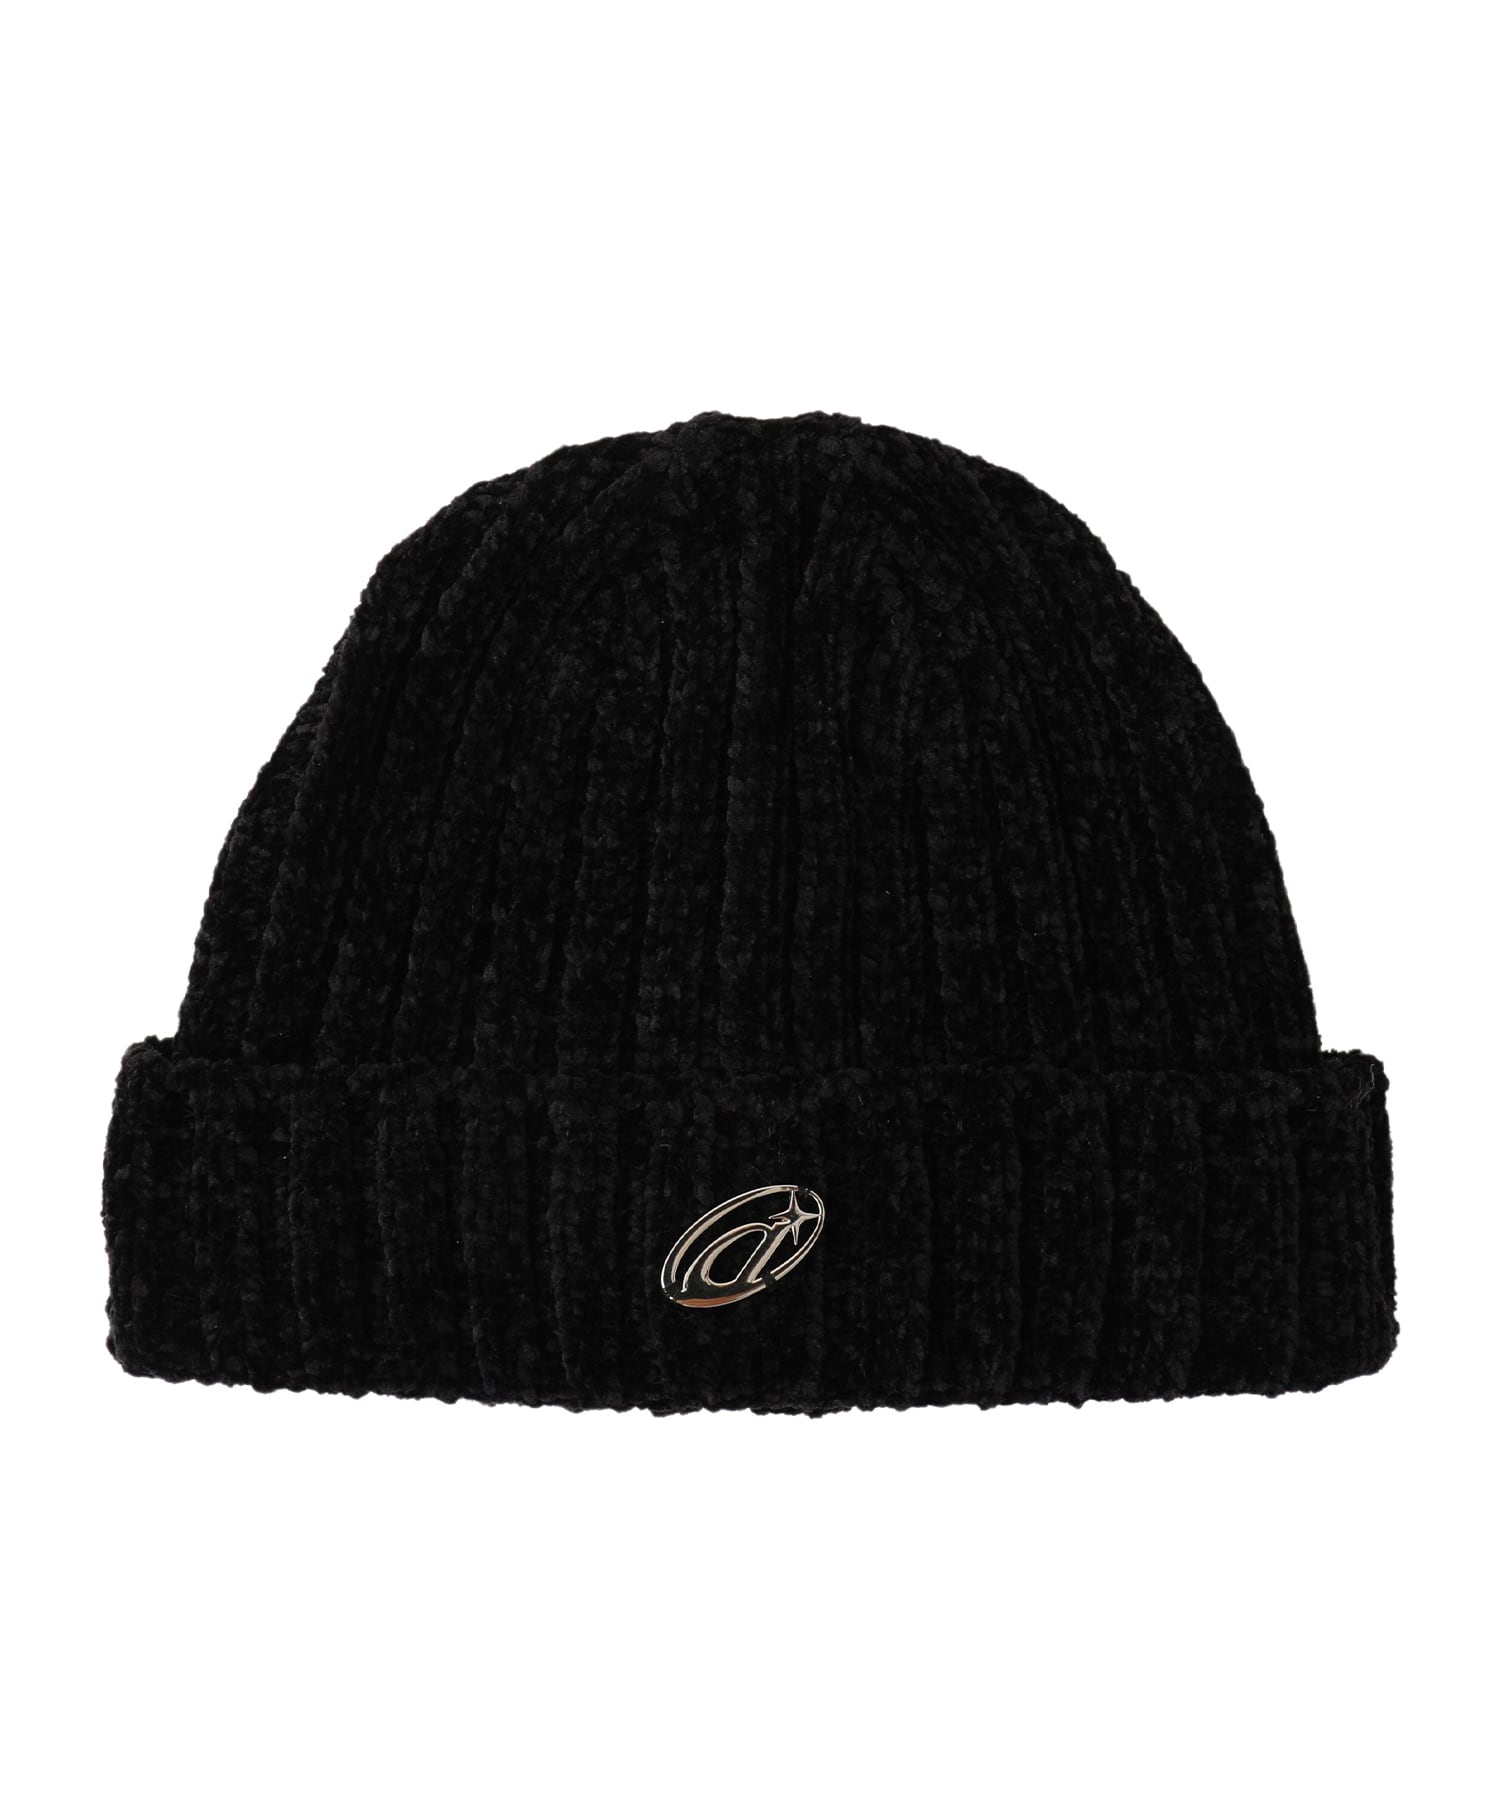 Point logo mole knit cap